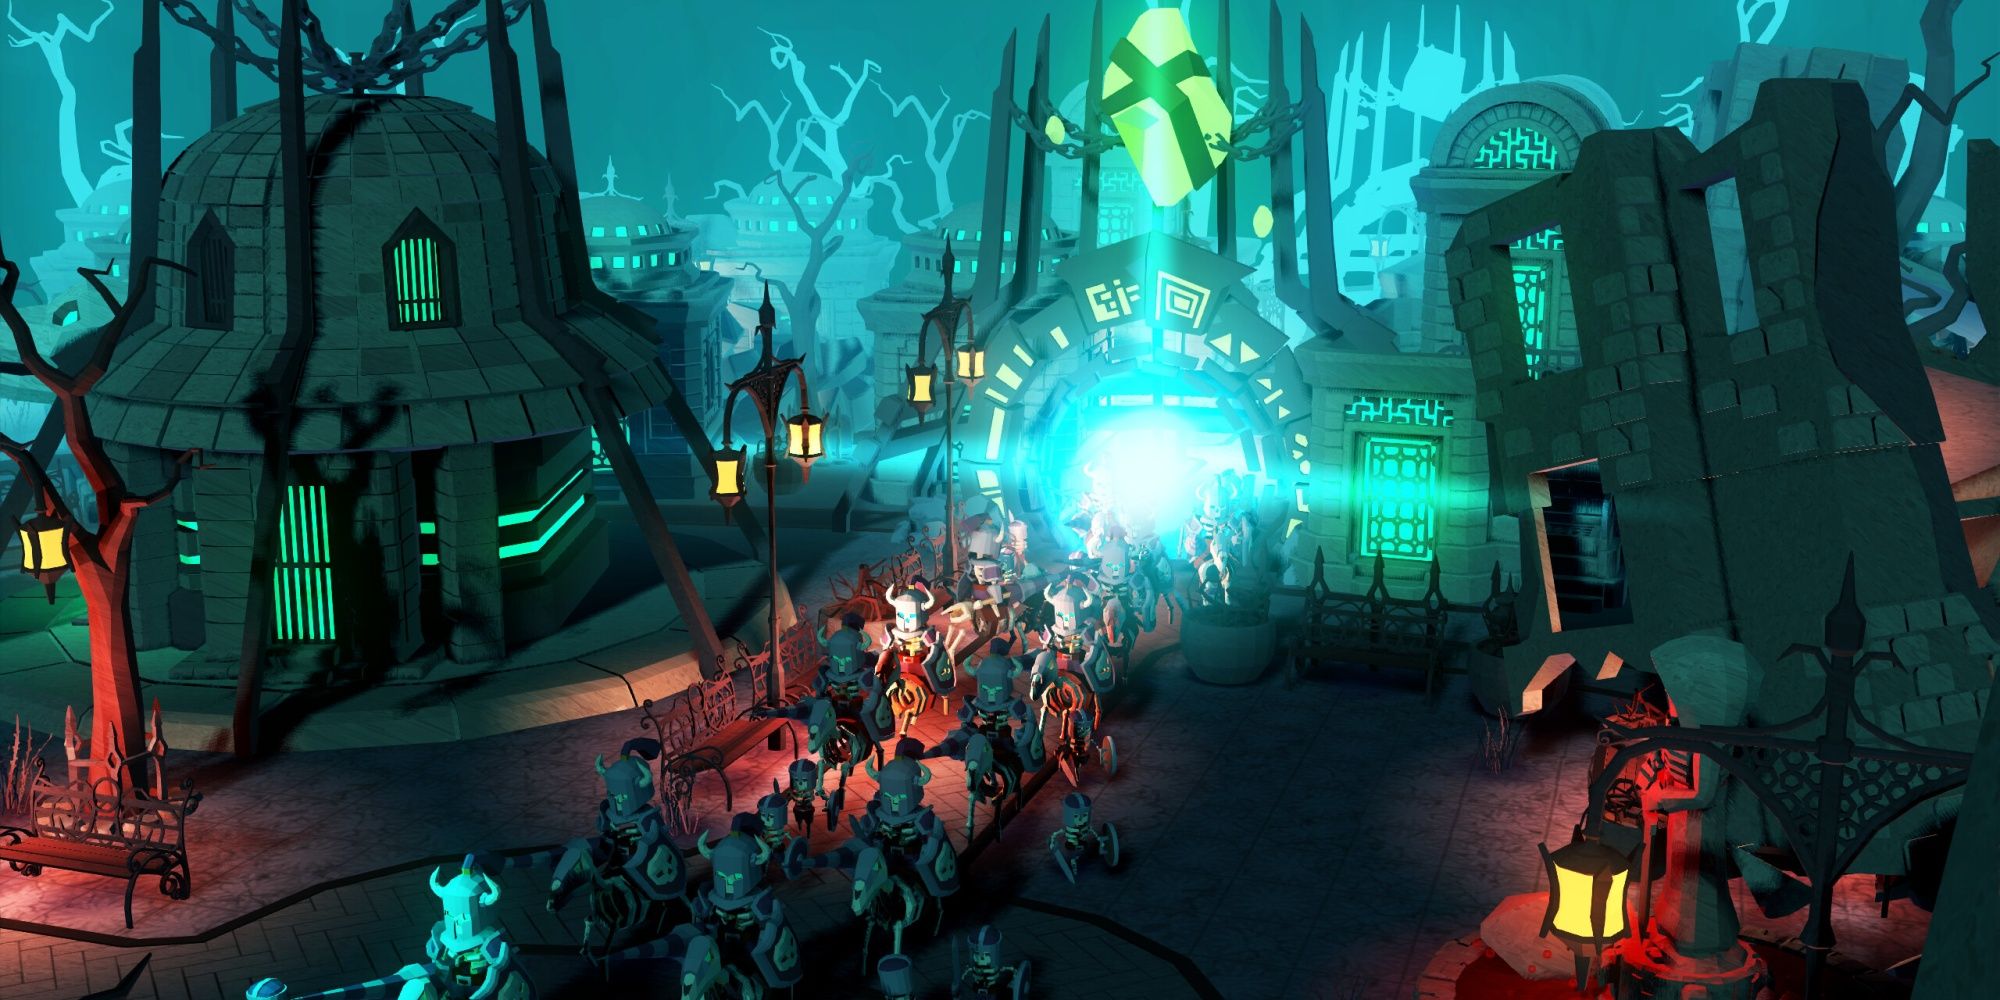 Undead Horde 2: Necropolis -Undead Minions Pouring Through A Summon Gate